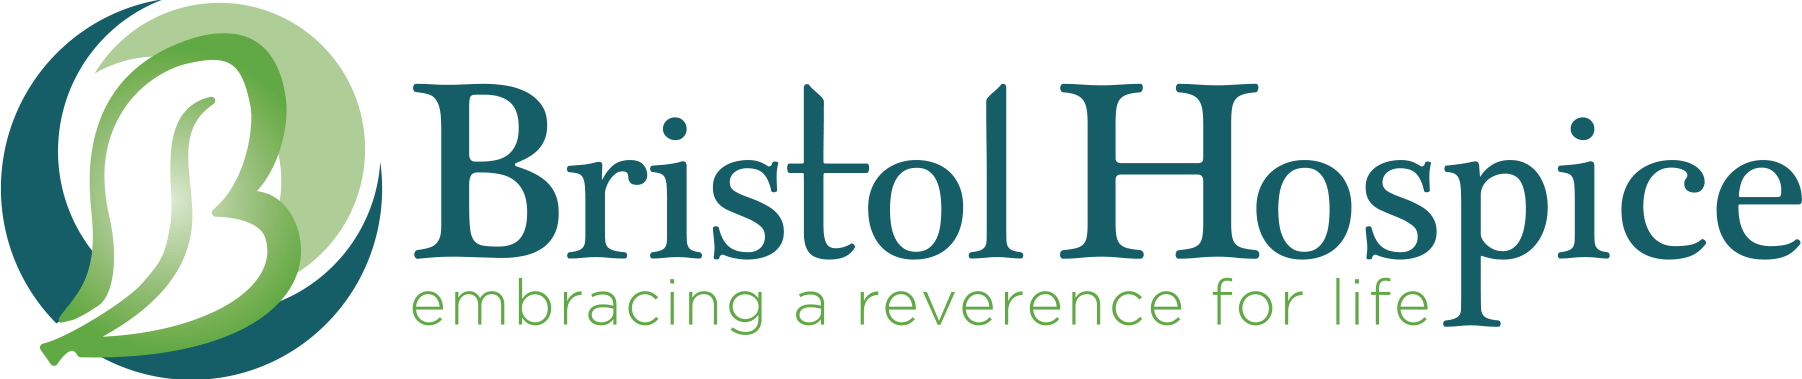 Hospice Logo - Bristol Hospice | Embracing a Reverence for Life